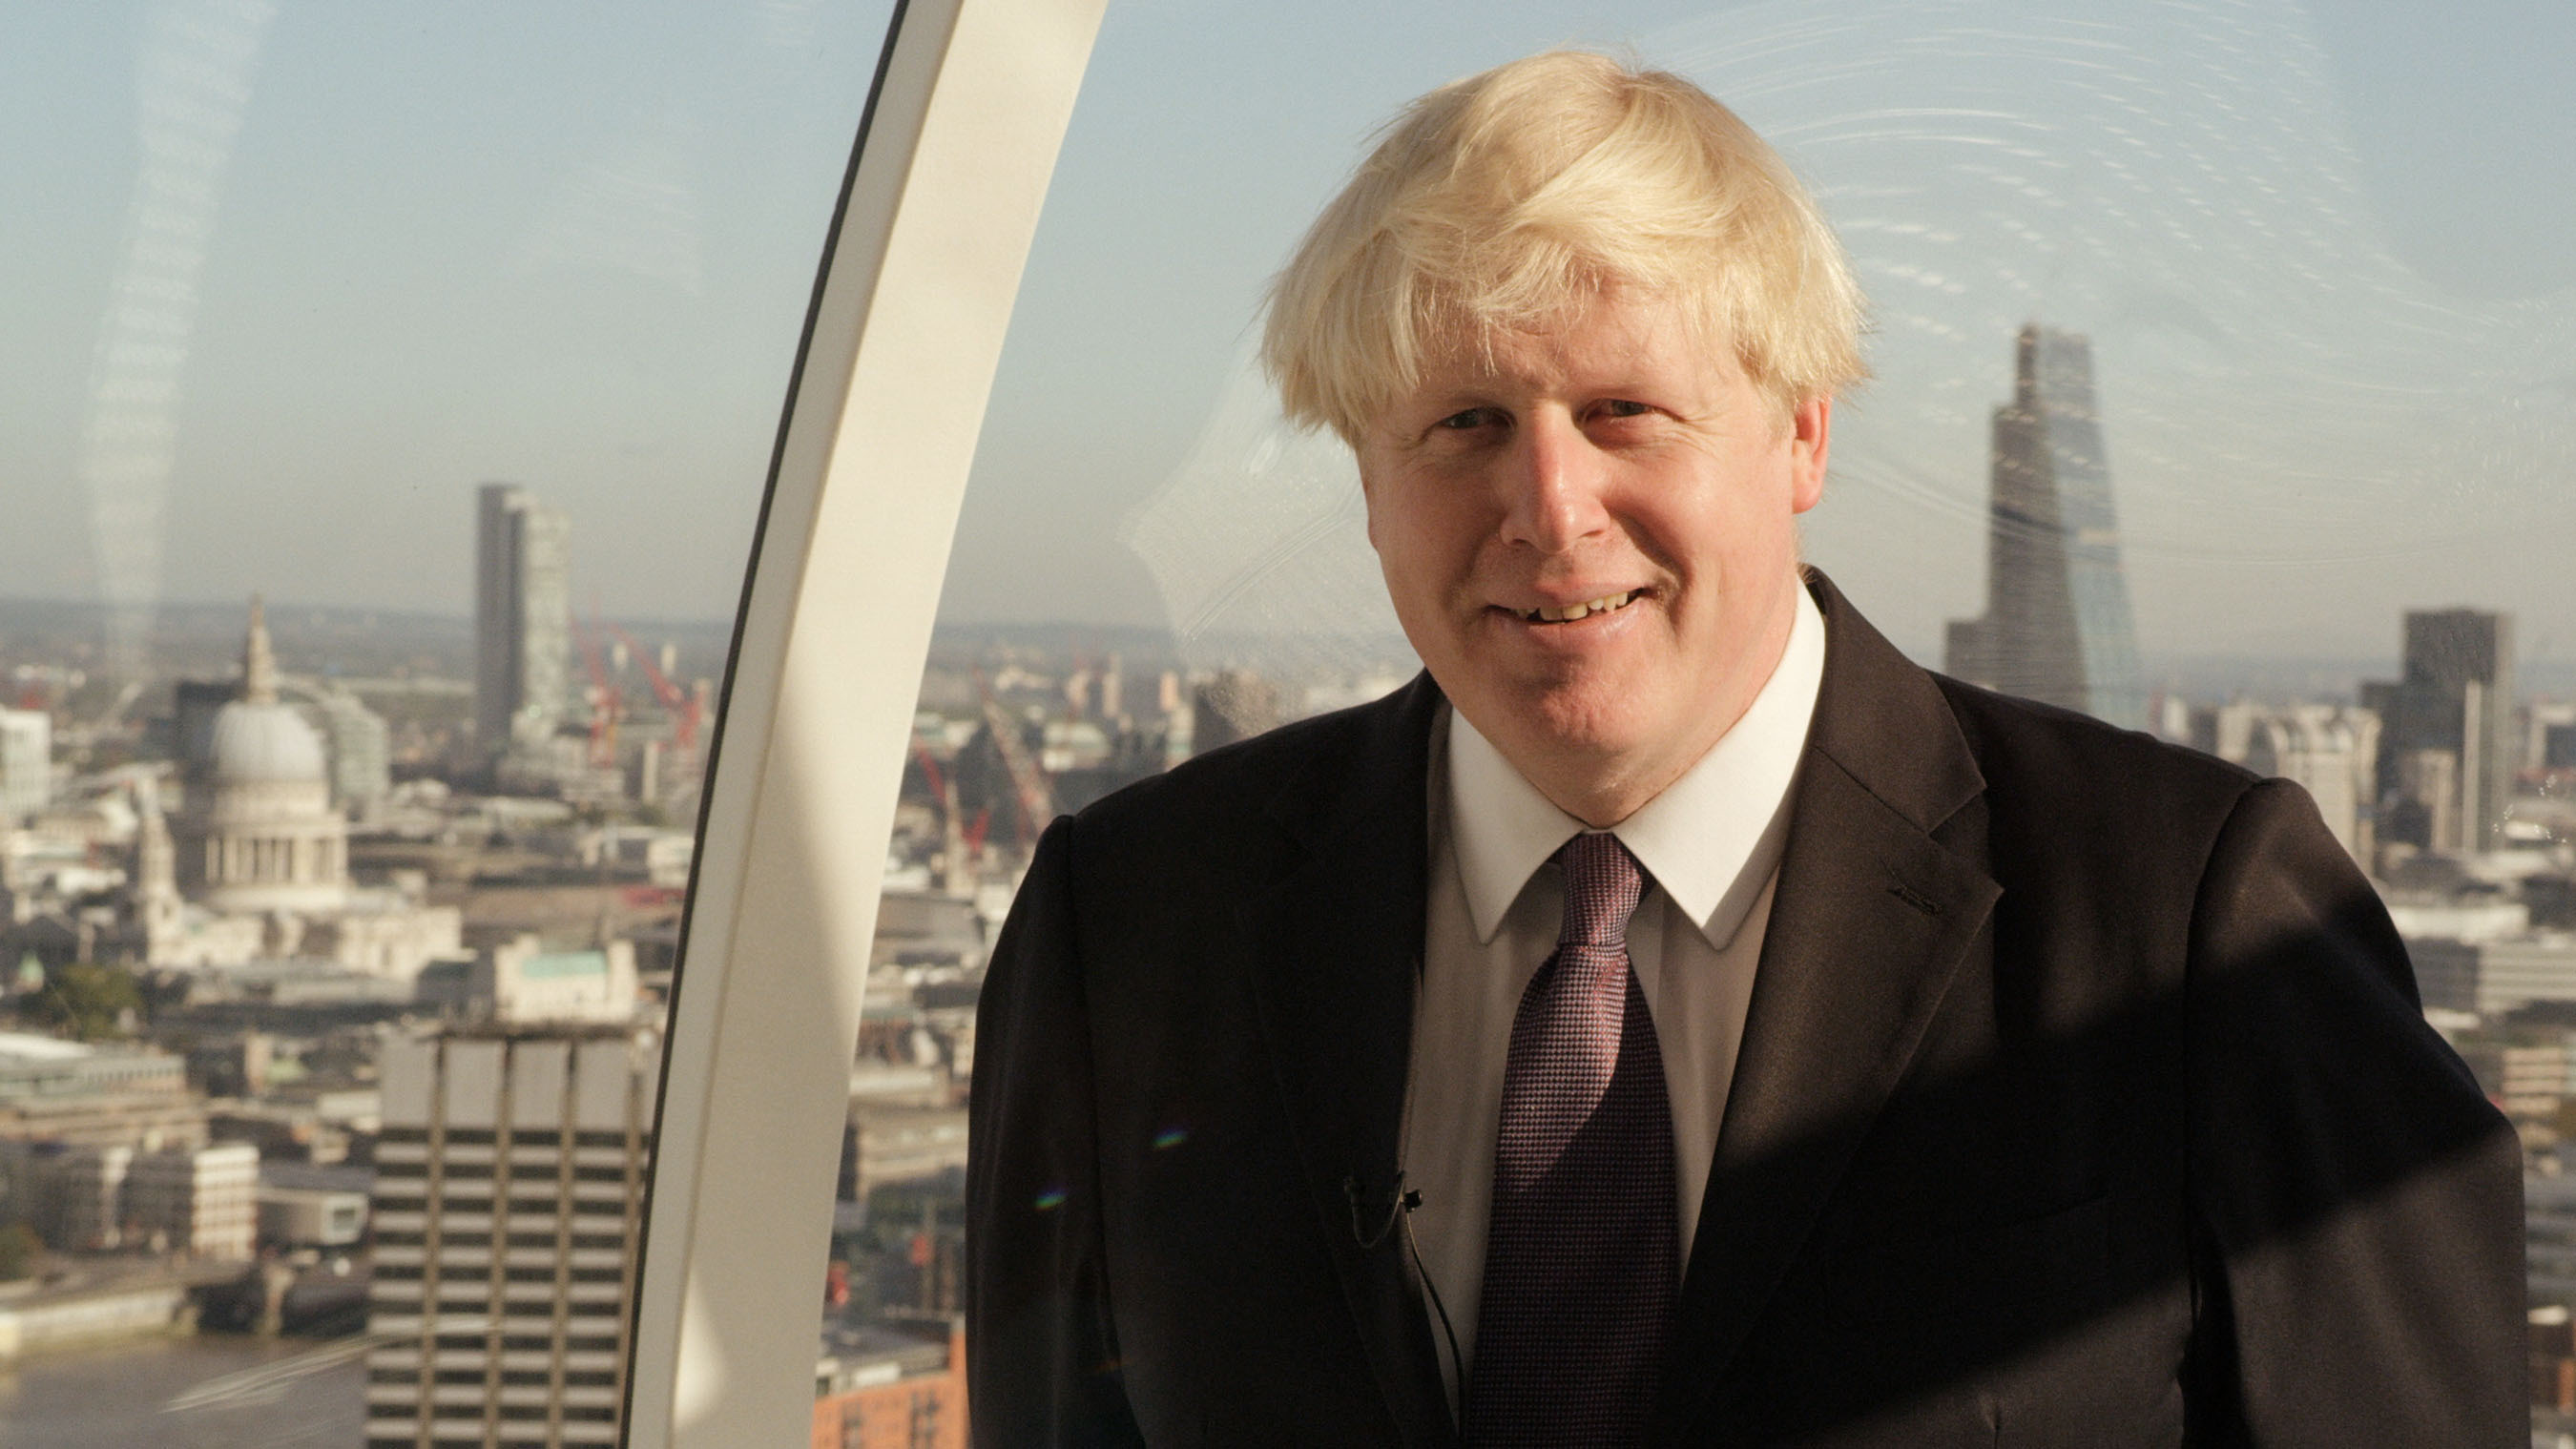 Mayor of London Boris Johnson. (PRNewsFoto/London & Partners) (PRNewsFoto/LONDON & PARTNERS)